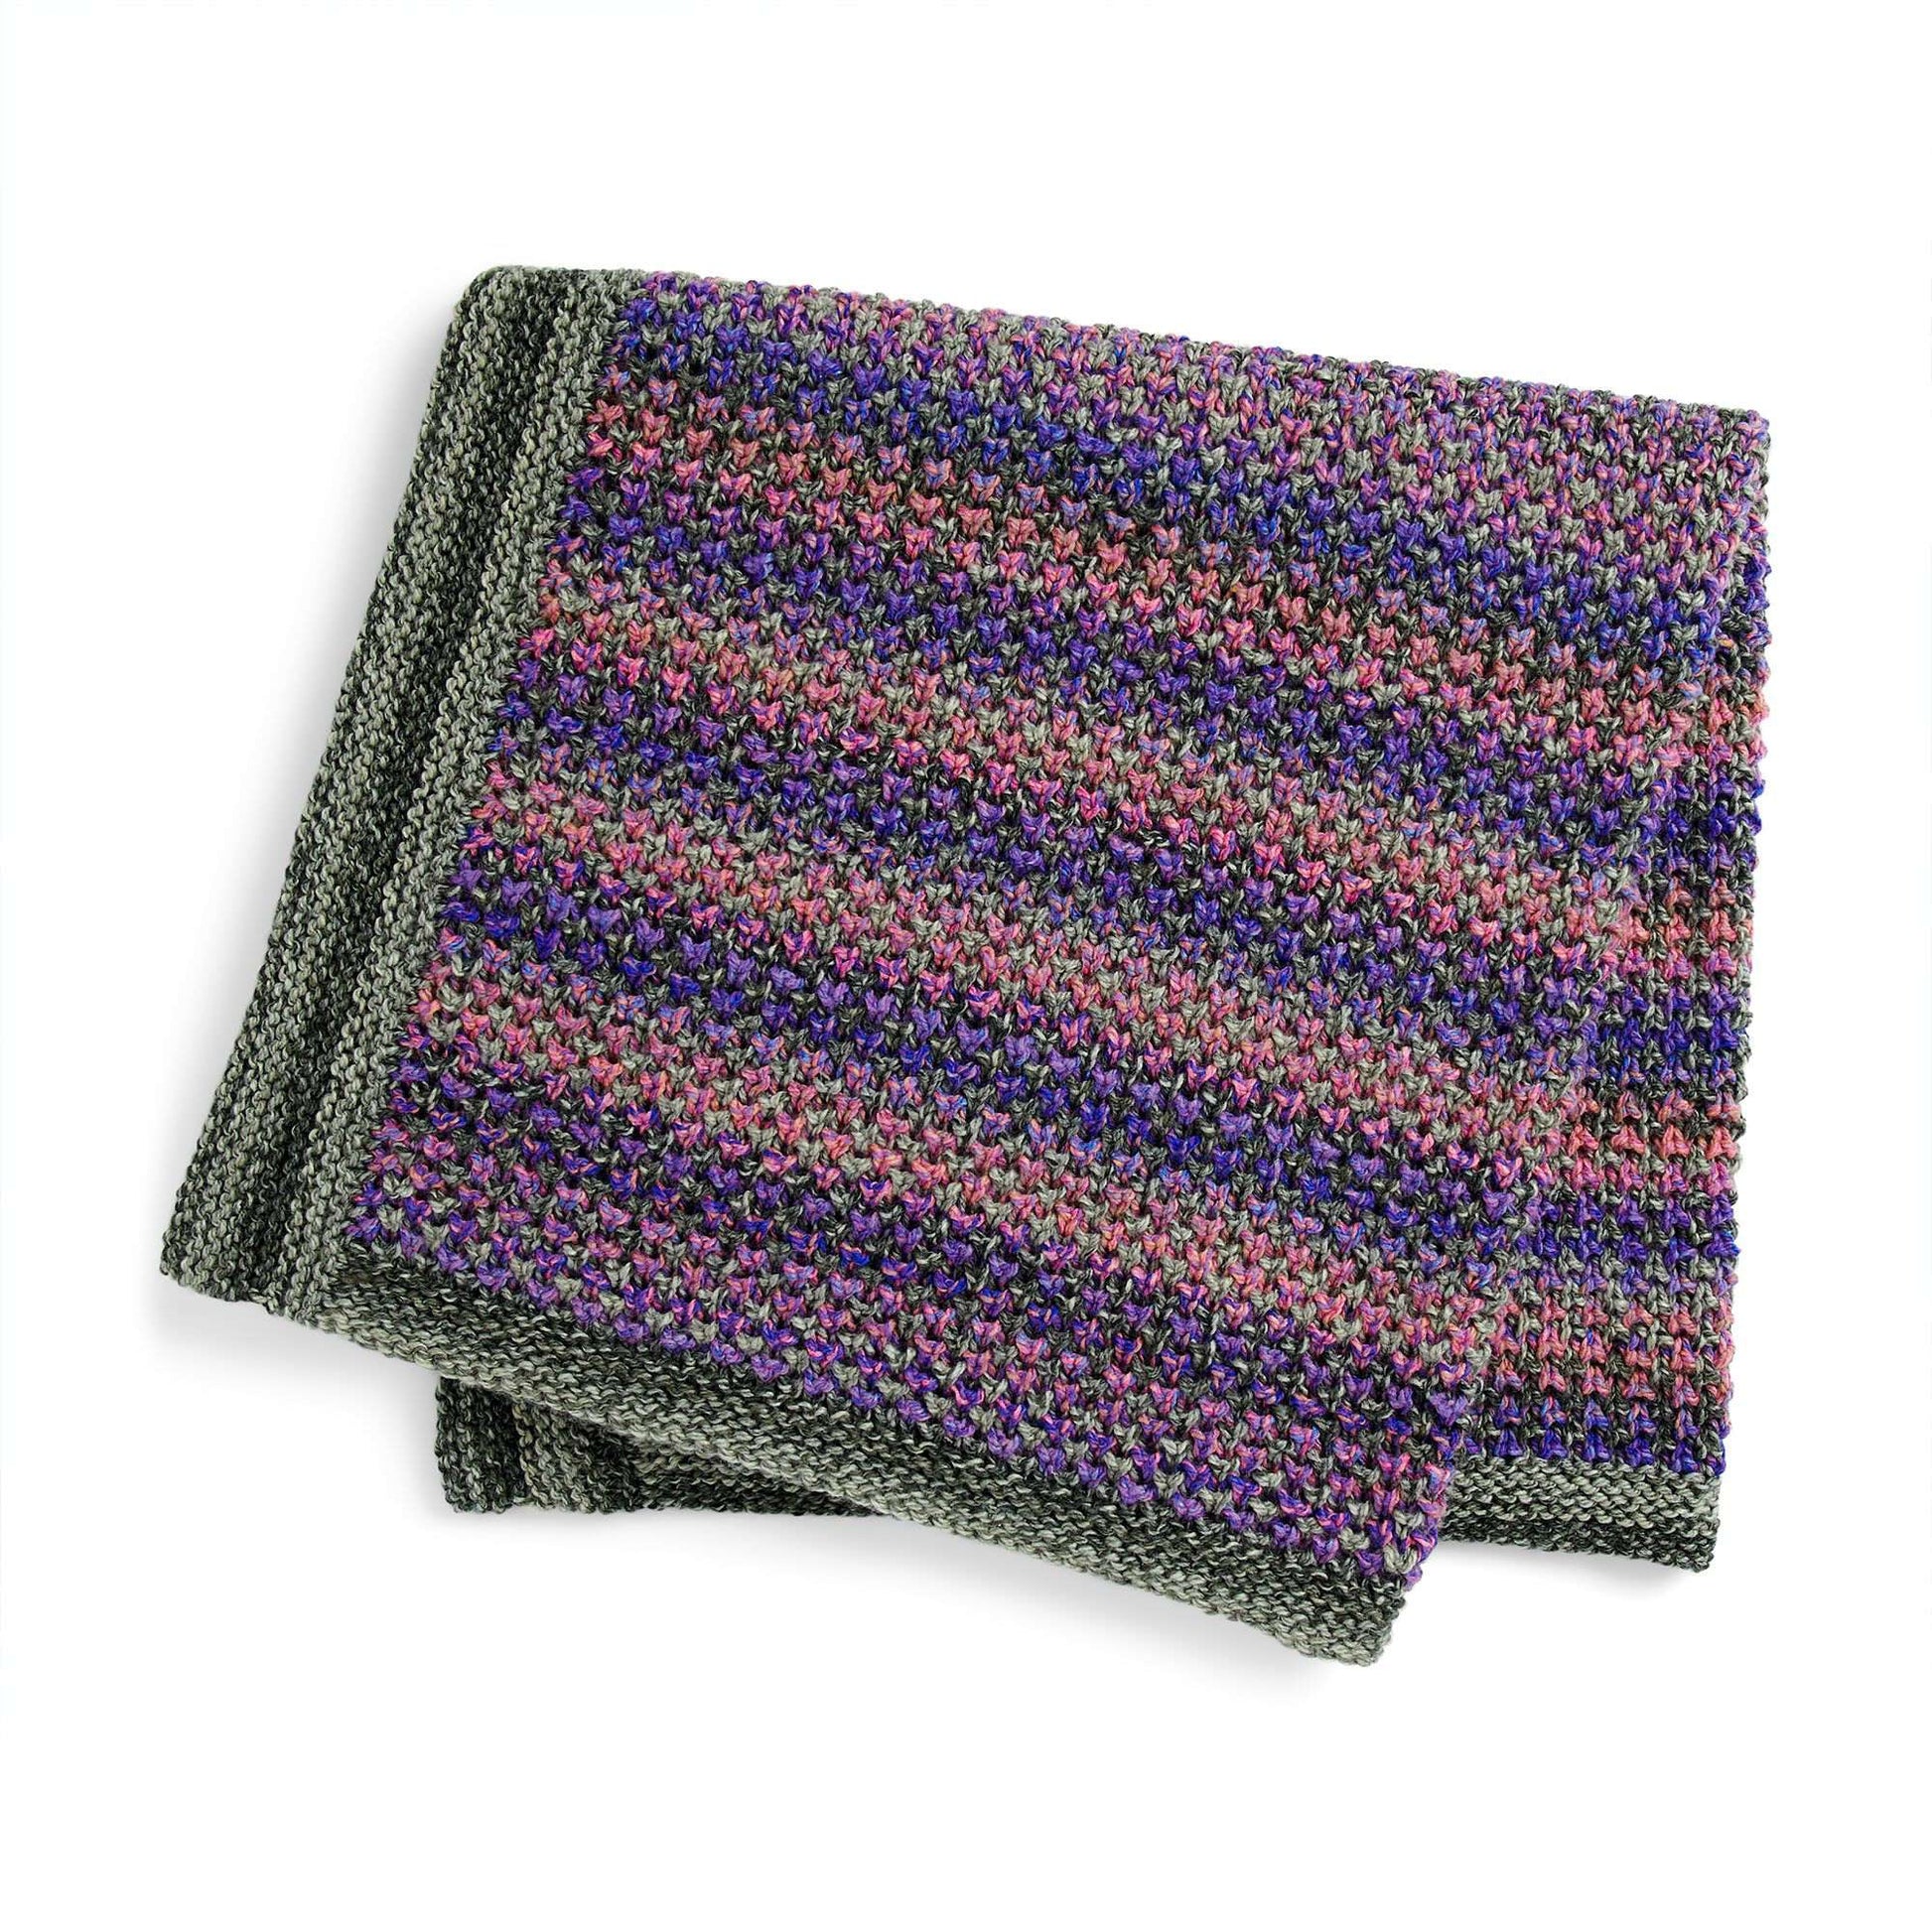 Free Caron Cakes Bee Stitch Knit Blanket Pattern